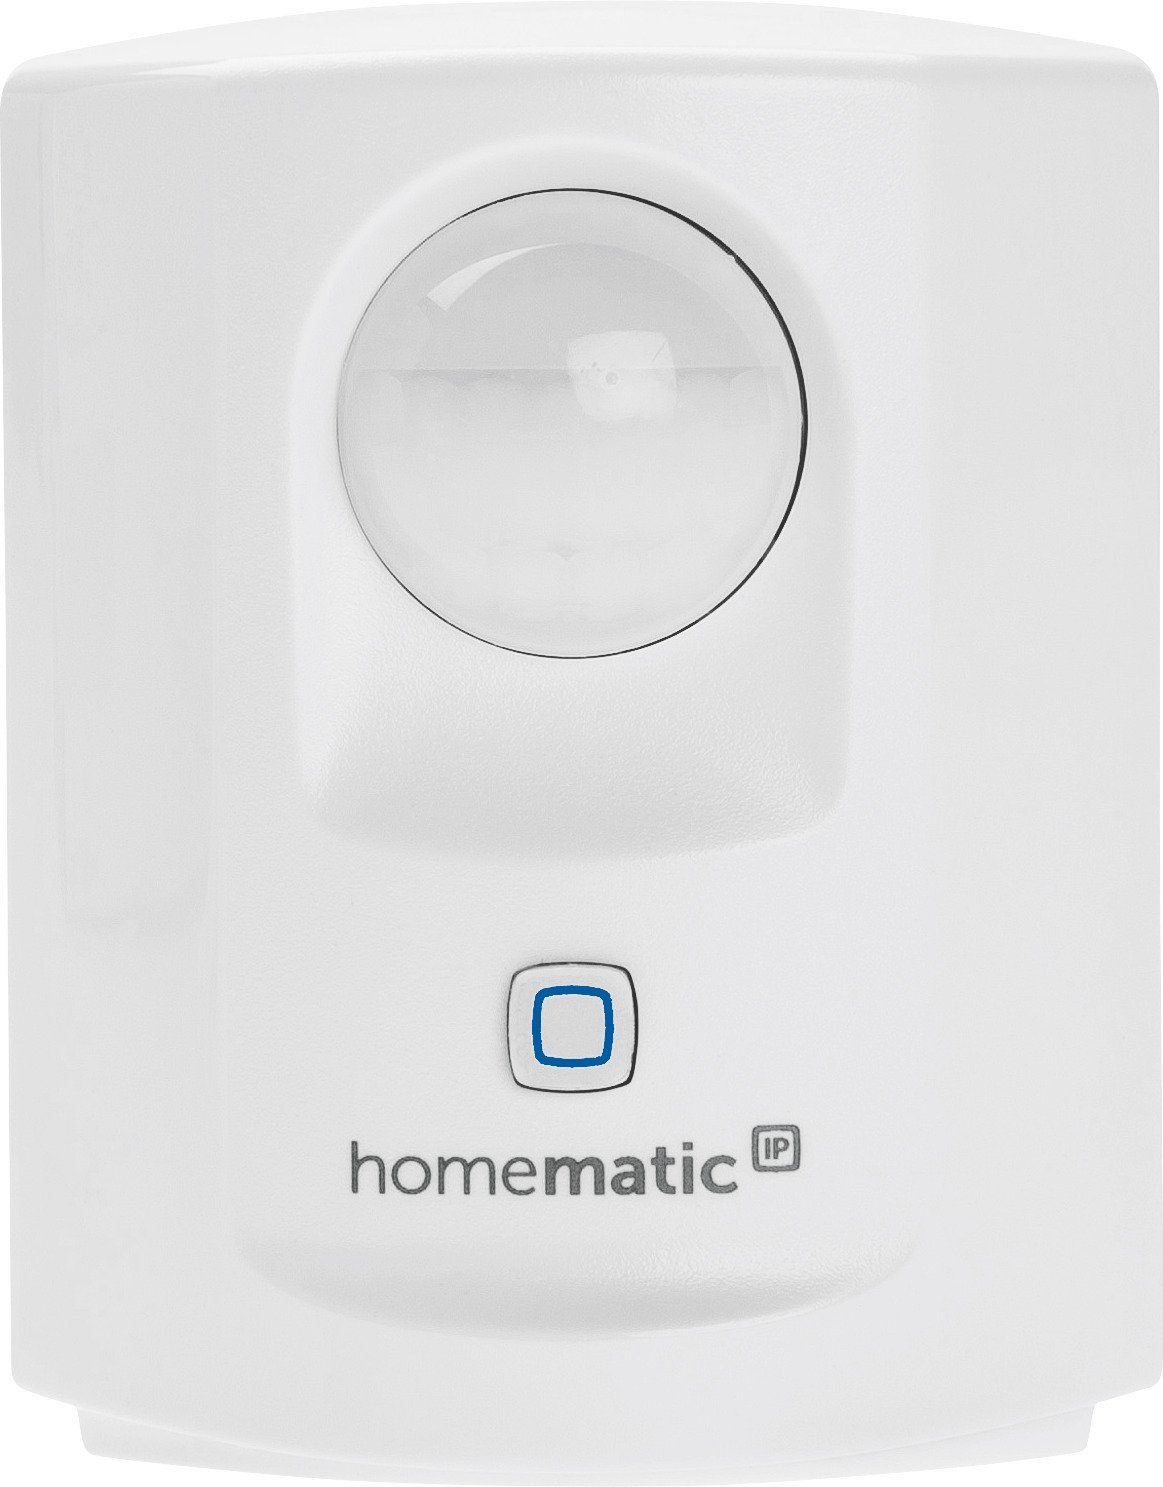 Homematic IP Starter-Set Smart-Home Alarm